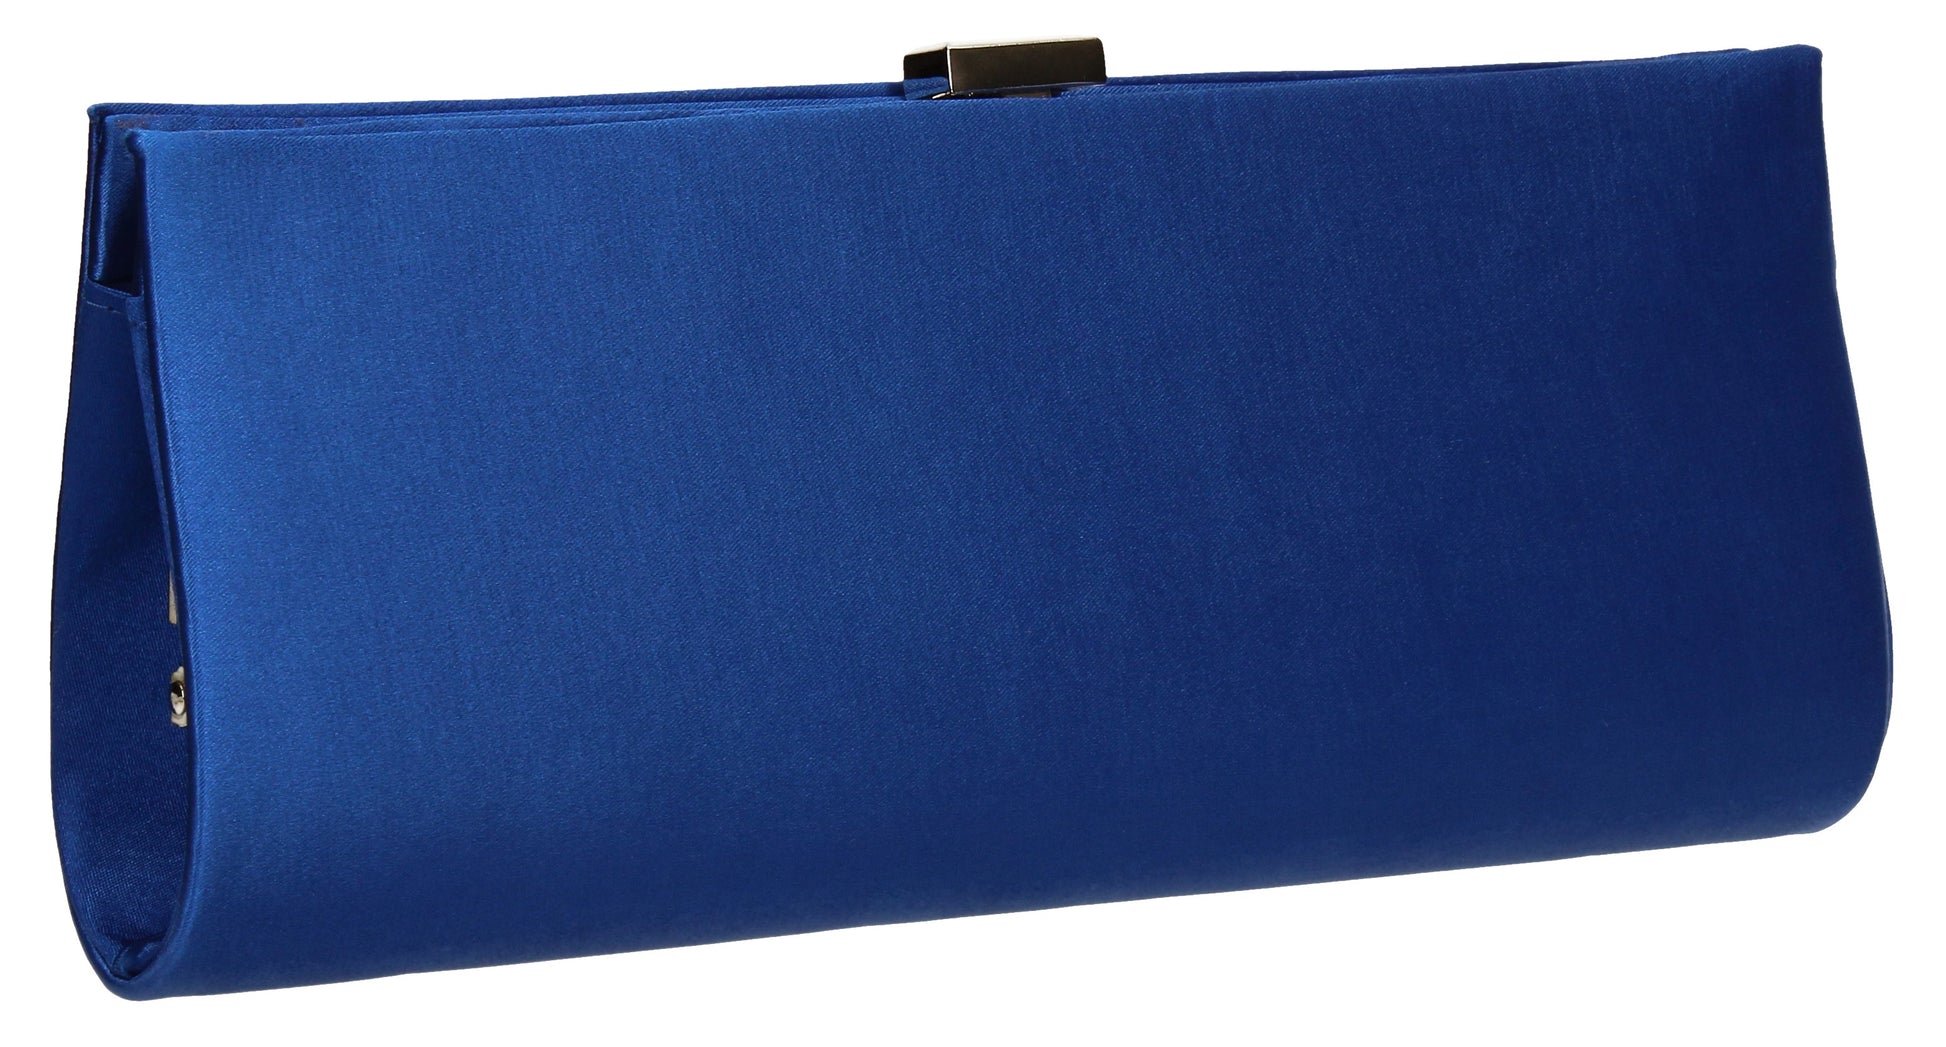 SWANKYSWANS Kerr Satin Clutch Bag Royal Blue Cute Cheap Clutch Bag For Weddings School and Work